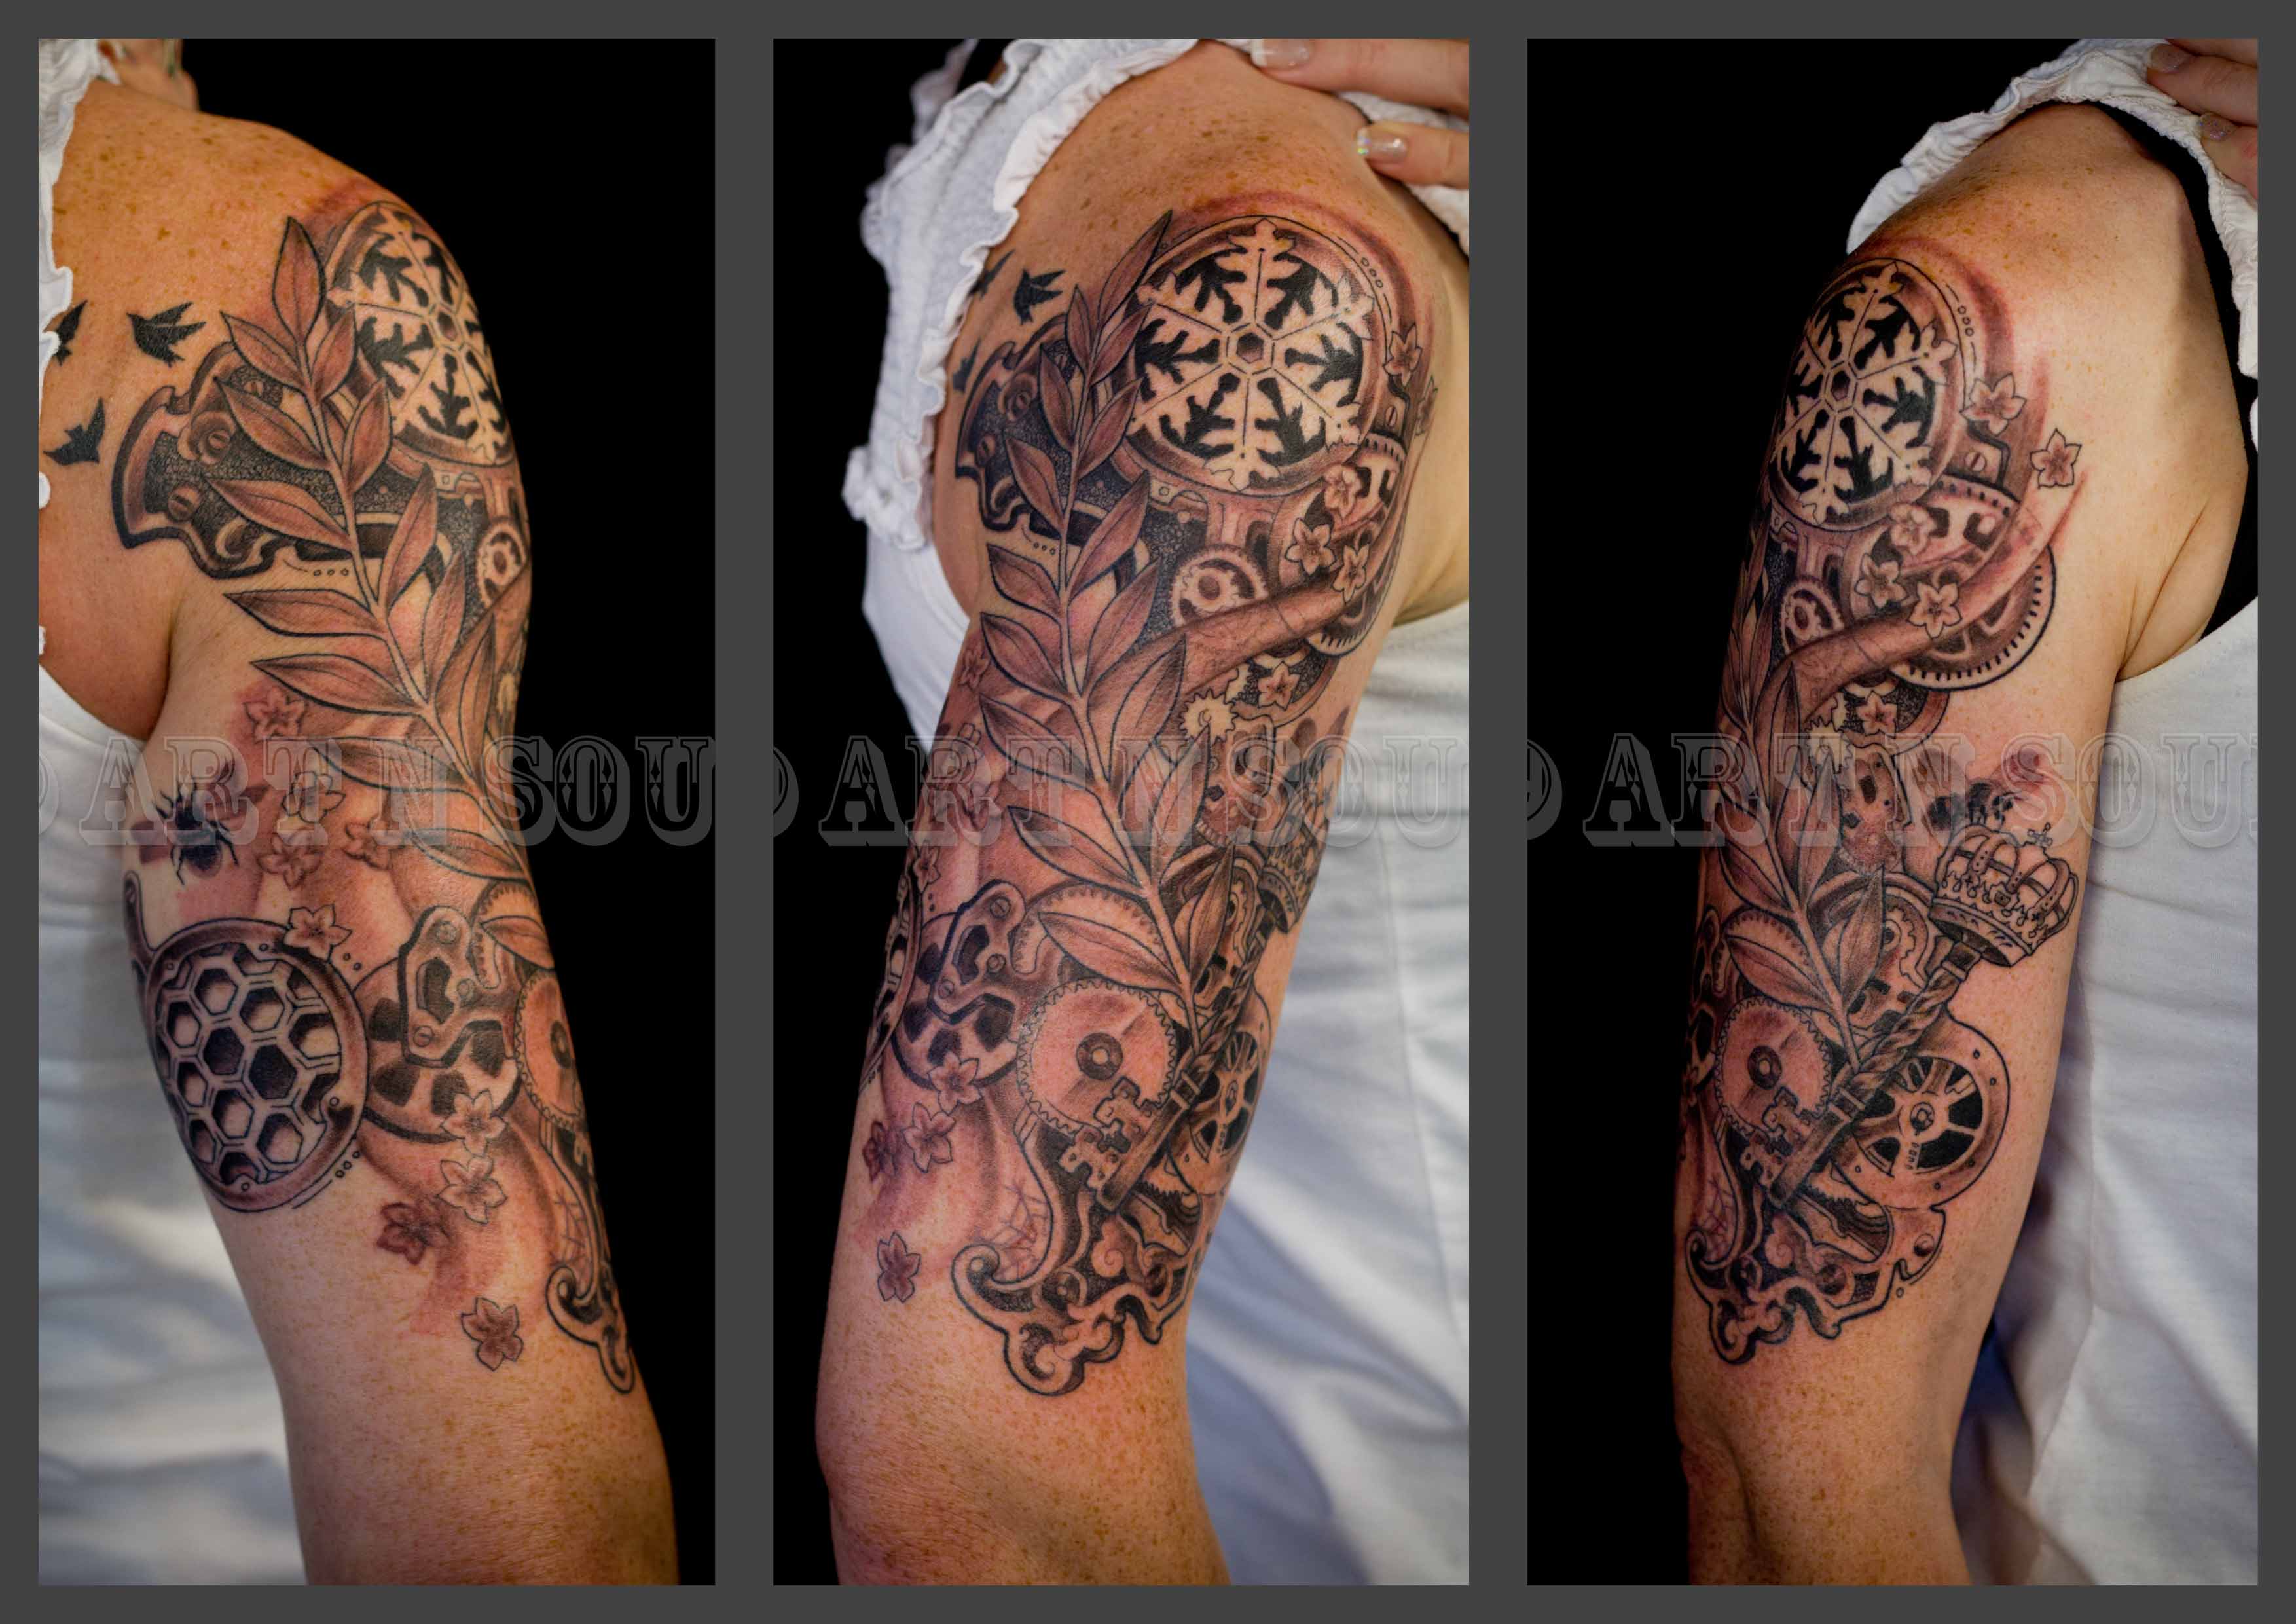 Sonya Steampunk 1:2 Sleeve Tattoo – Art n Soul Tattoo Studio